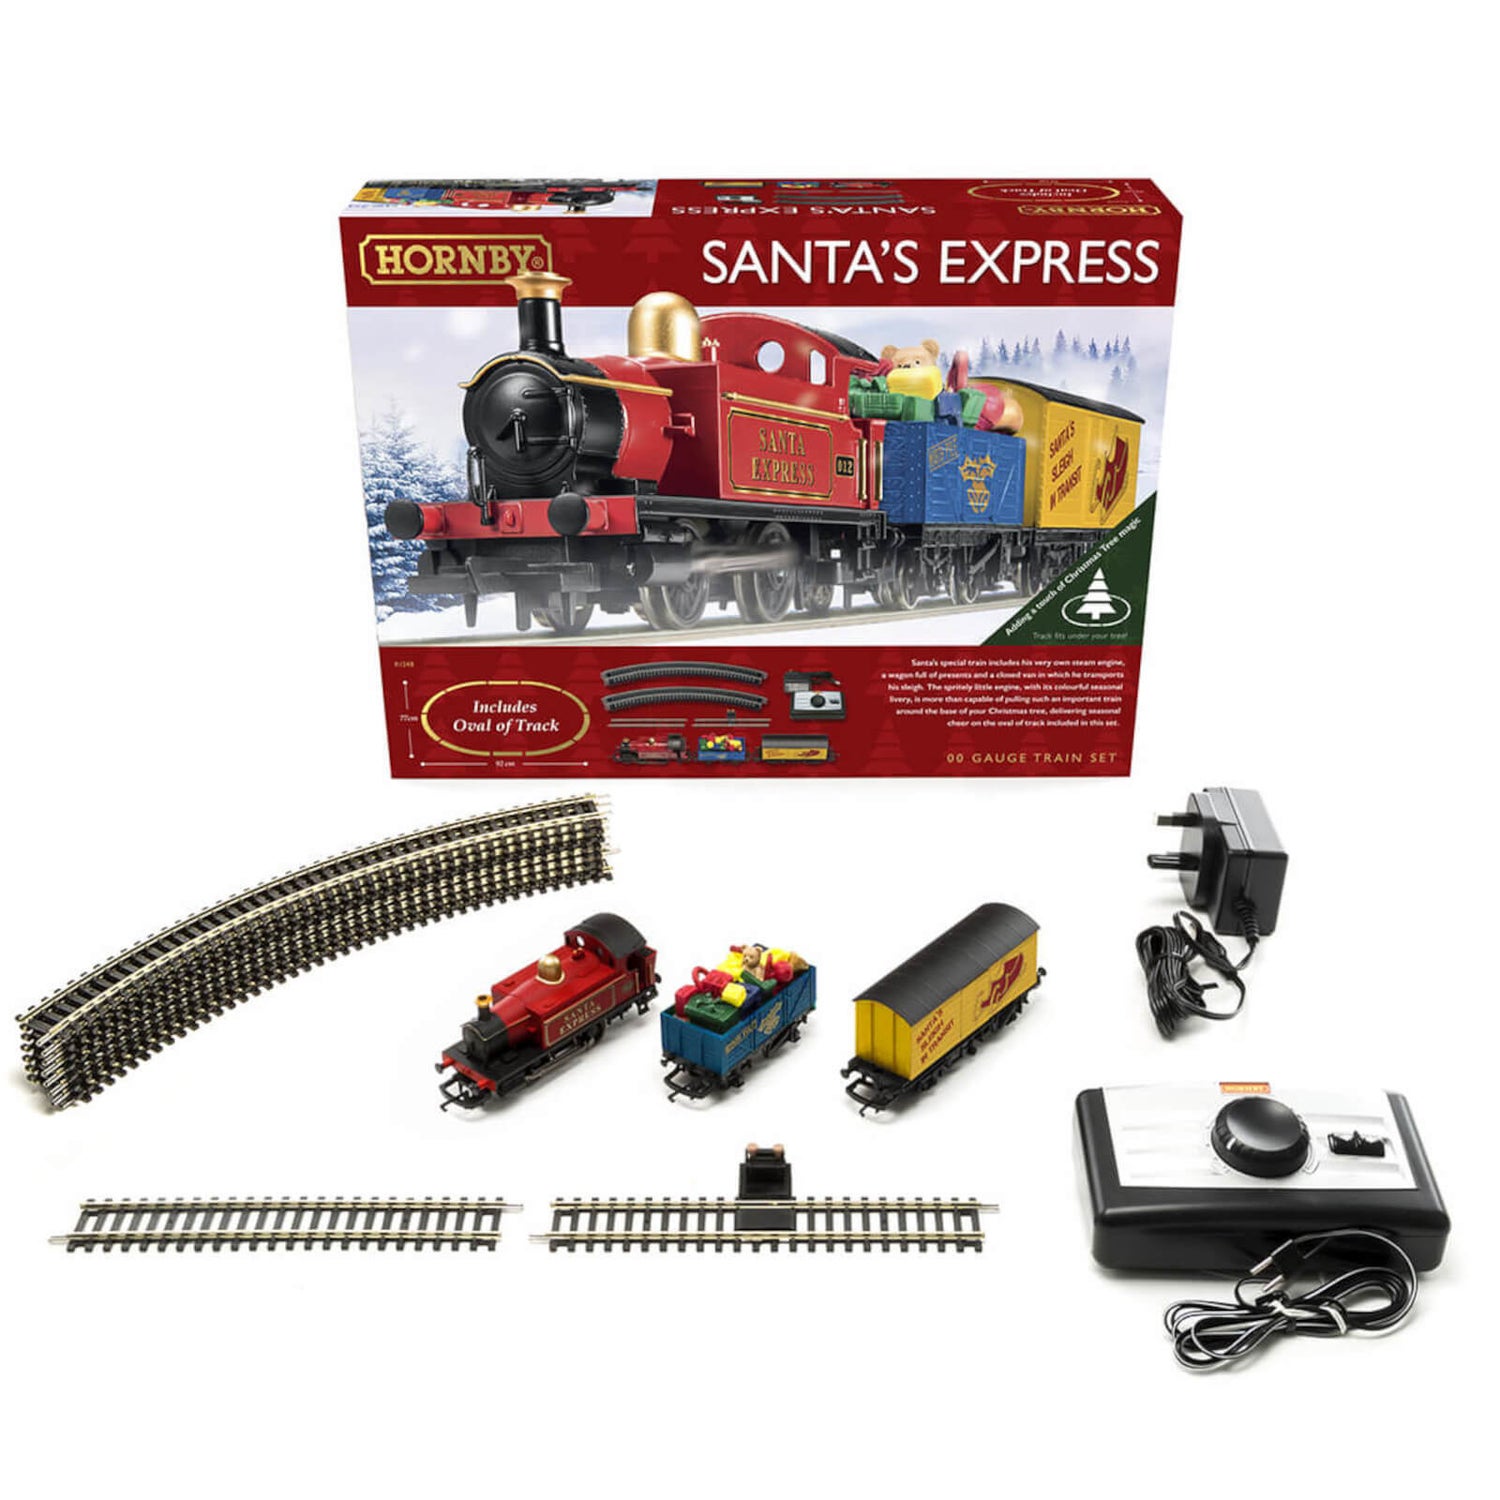 Santa's Express Model Train Set